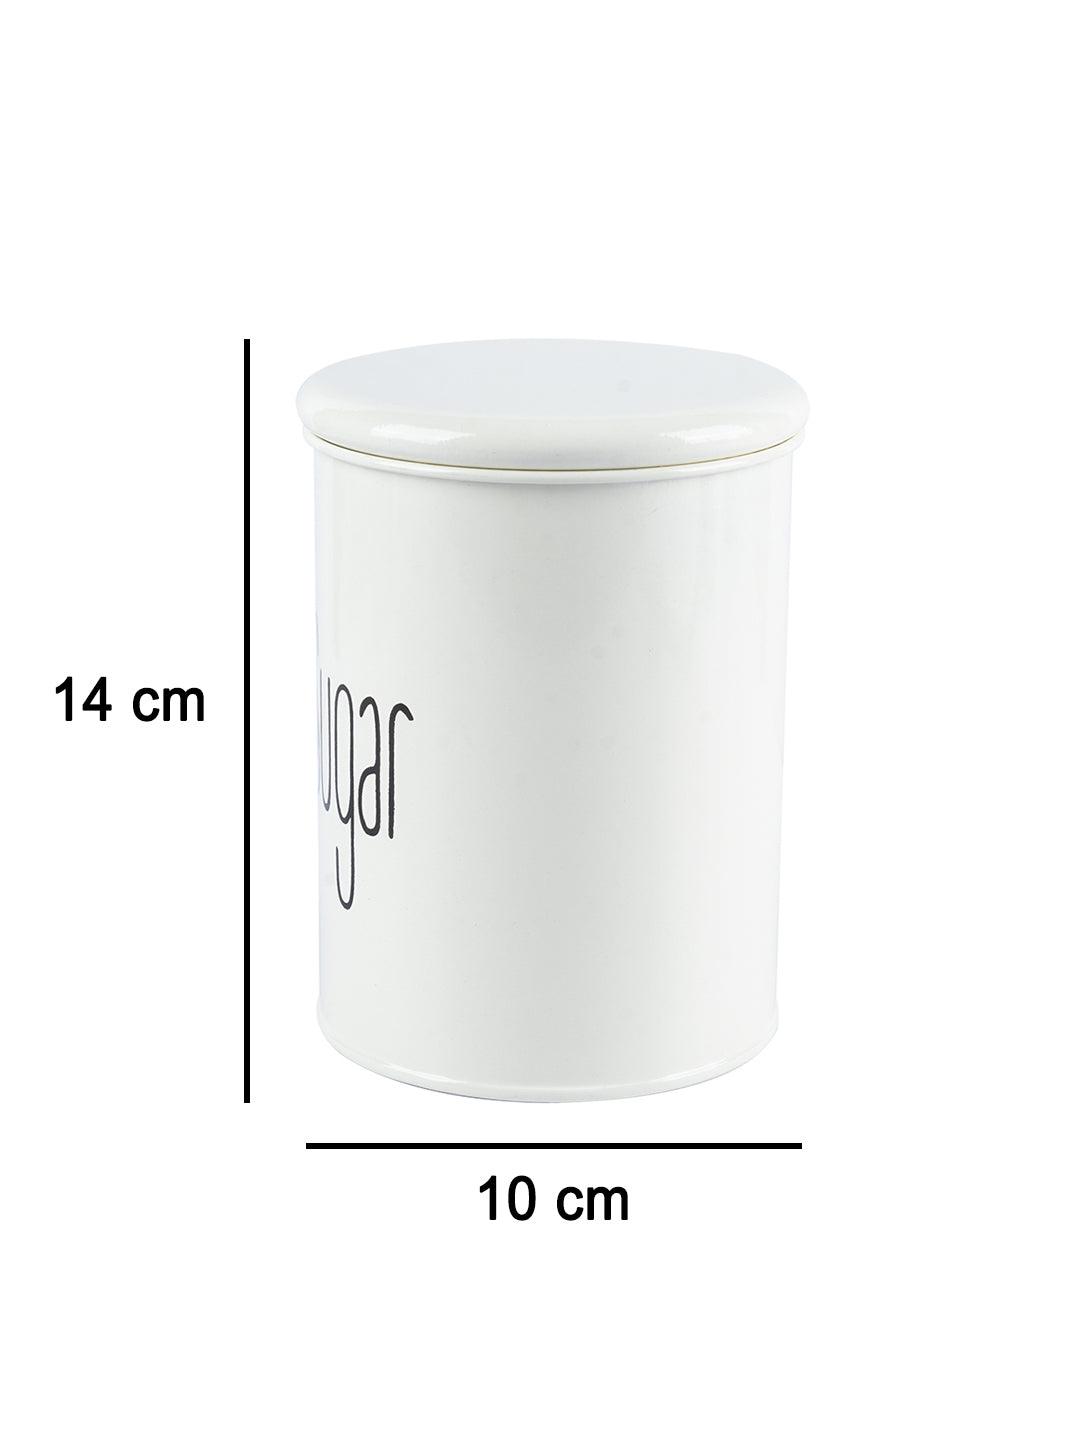 Tea & Sugar Jars - Set Of 2 (White, Each 900 mL) - MARKET 99